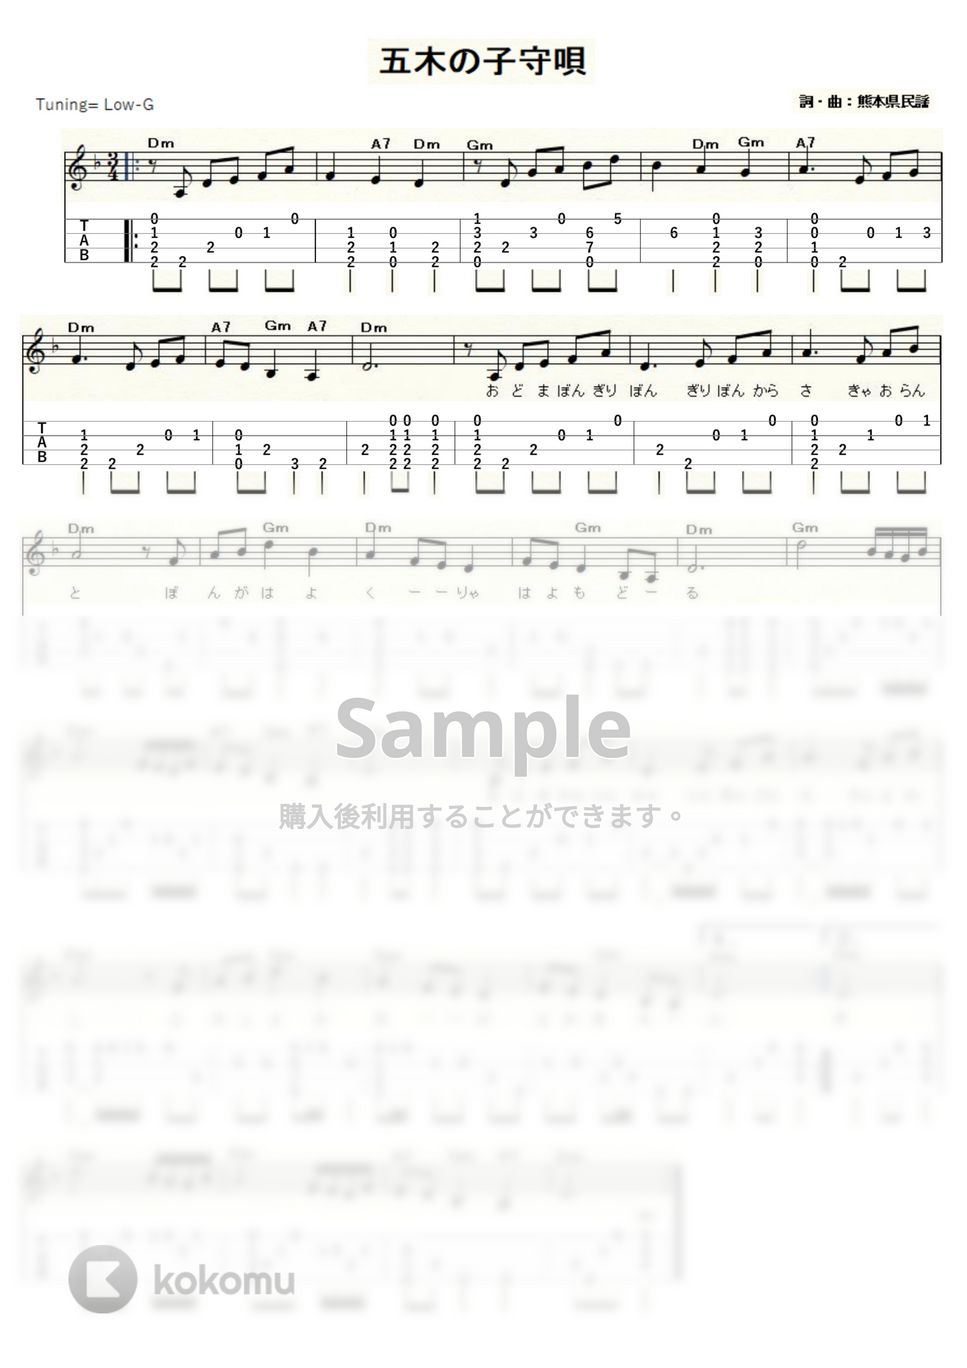 五木の子守唄 (ｳｸﾚﾚｿﾛ / Low-G / 中級) by ukulelepapa